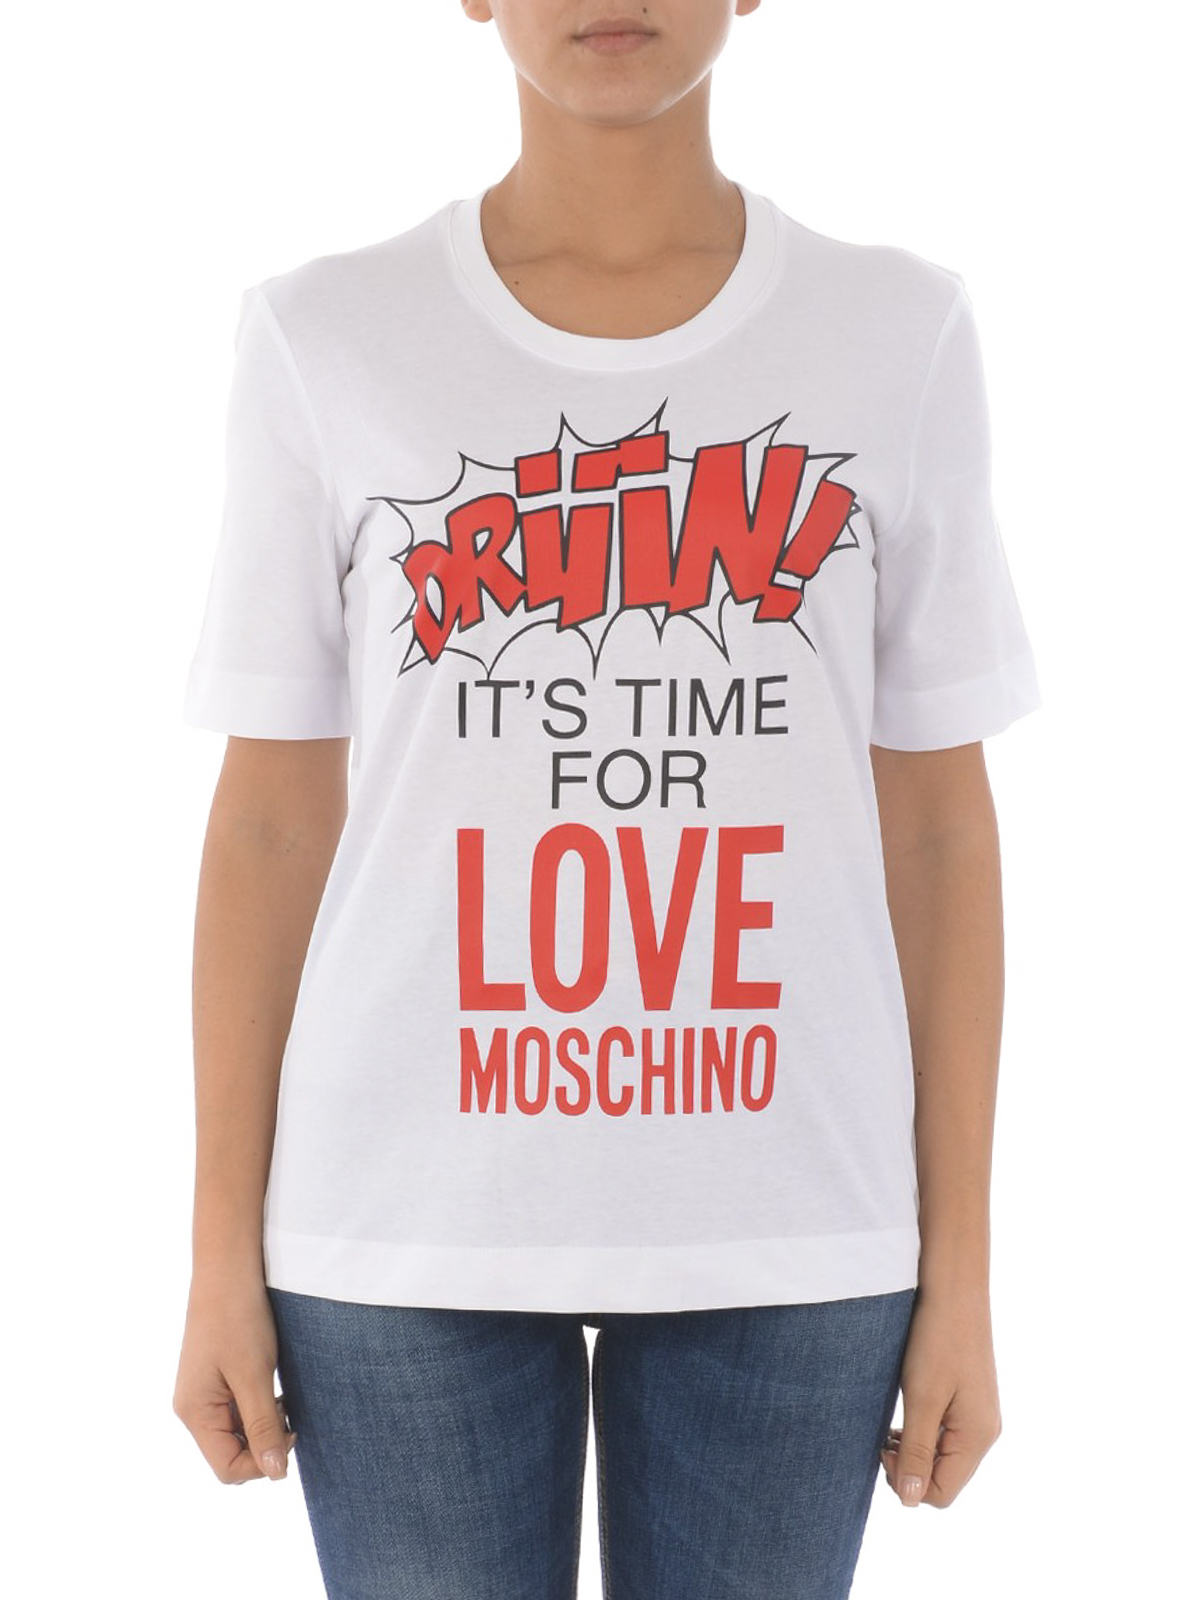 Konsekvent Dalset utilstrækkelig T-shirts Love Moschino - Comic style T-shirt - W4F152EM3876A00